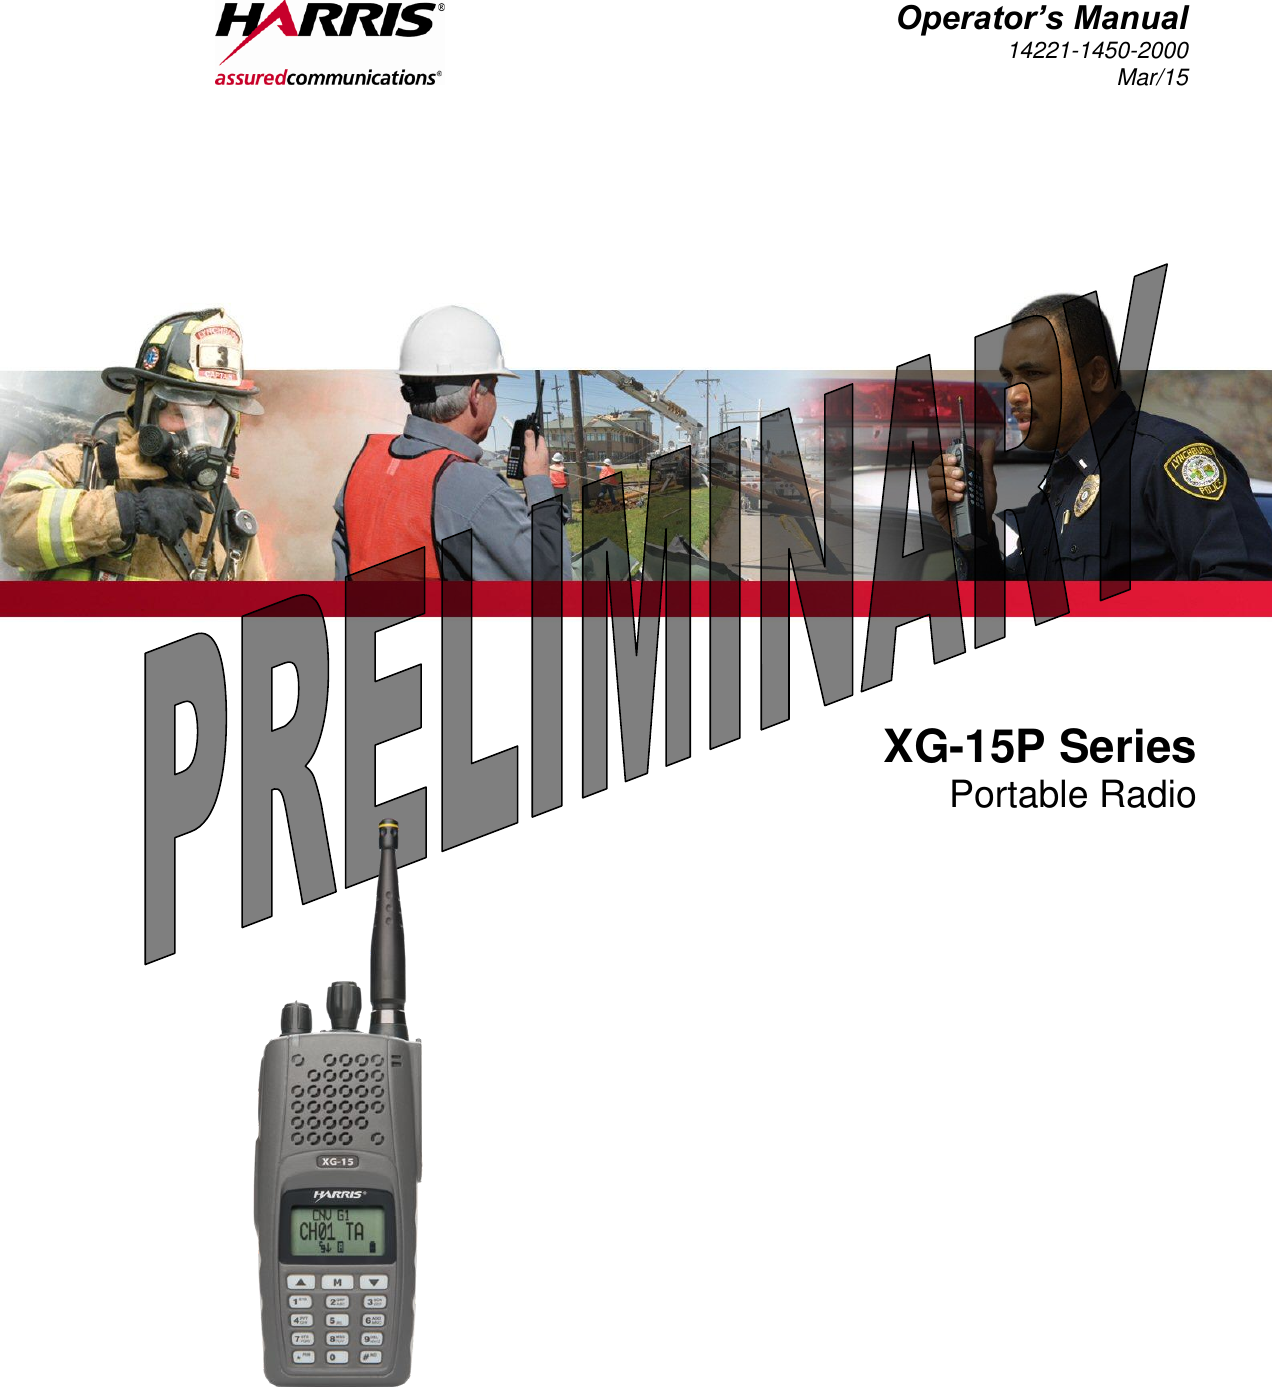  Operator’s Manual 14221-1450-2000 Mar/15     XG-15P Series Portable Radio  